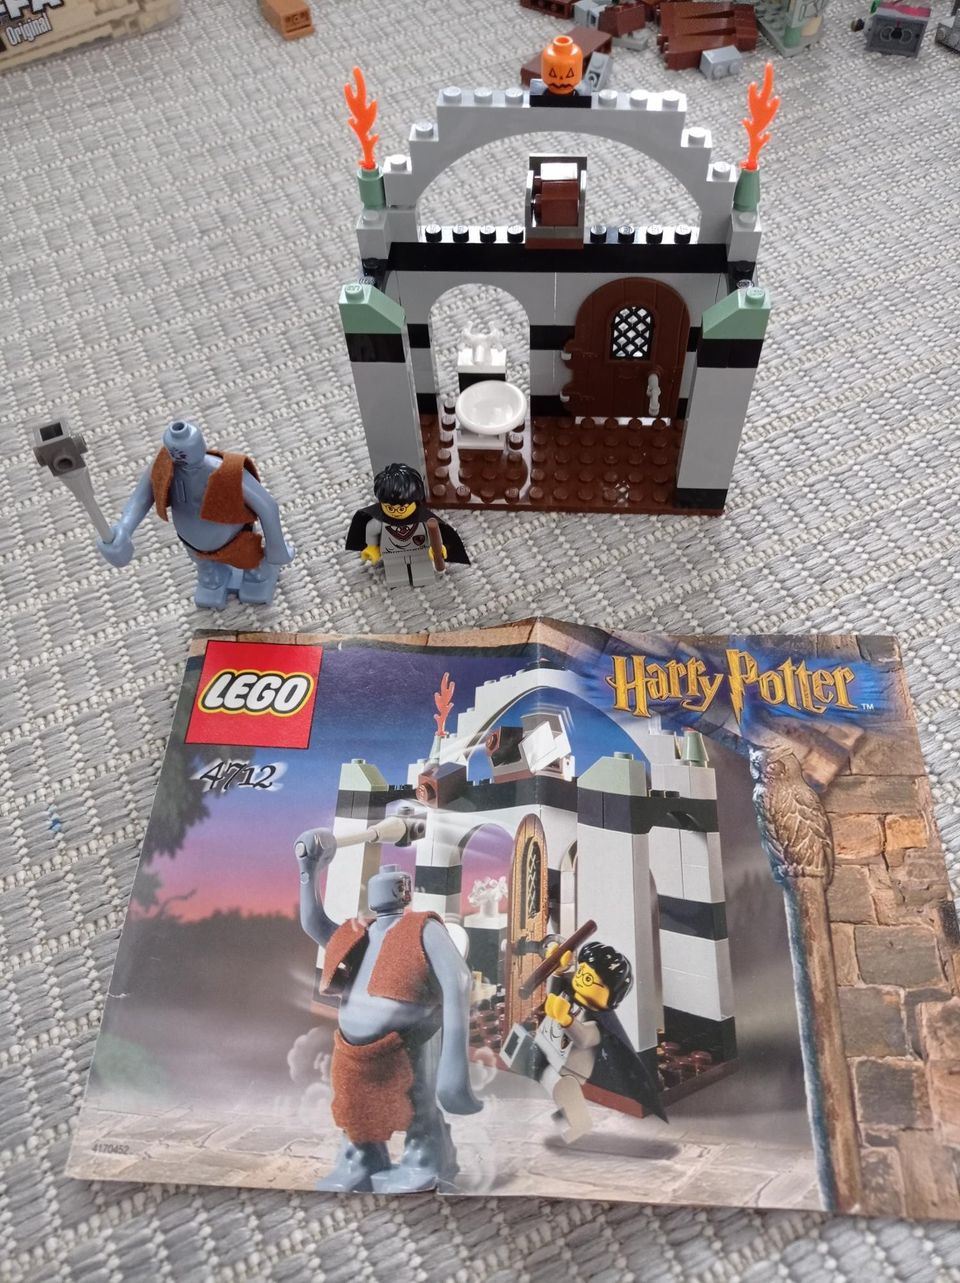 Harry Potter Lego 4712